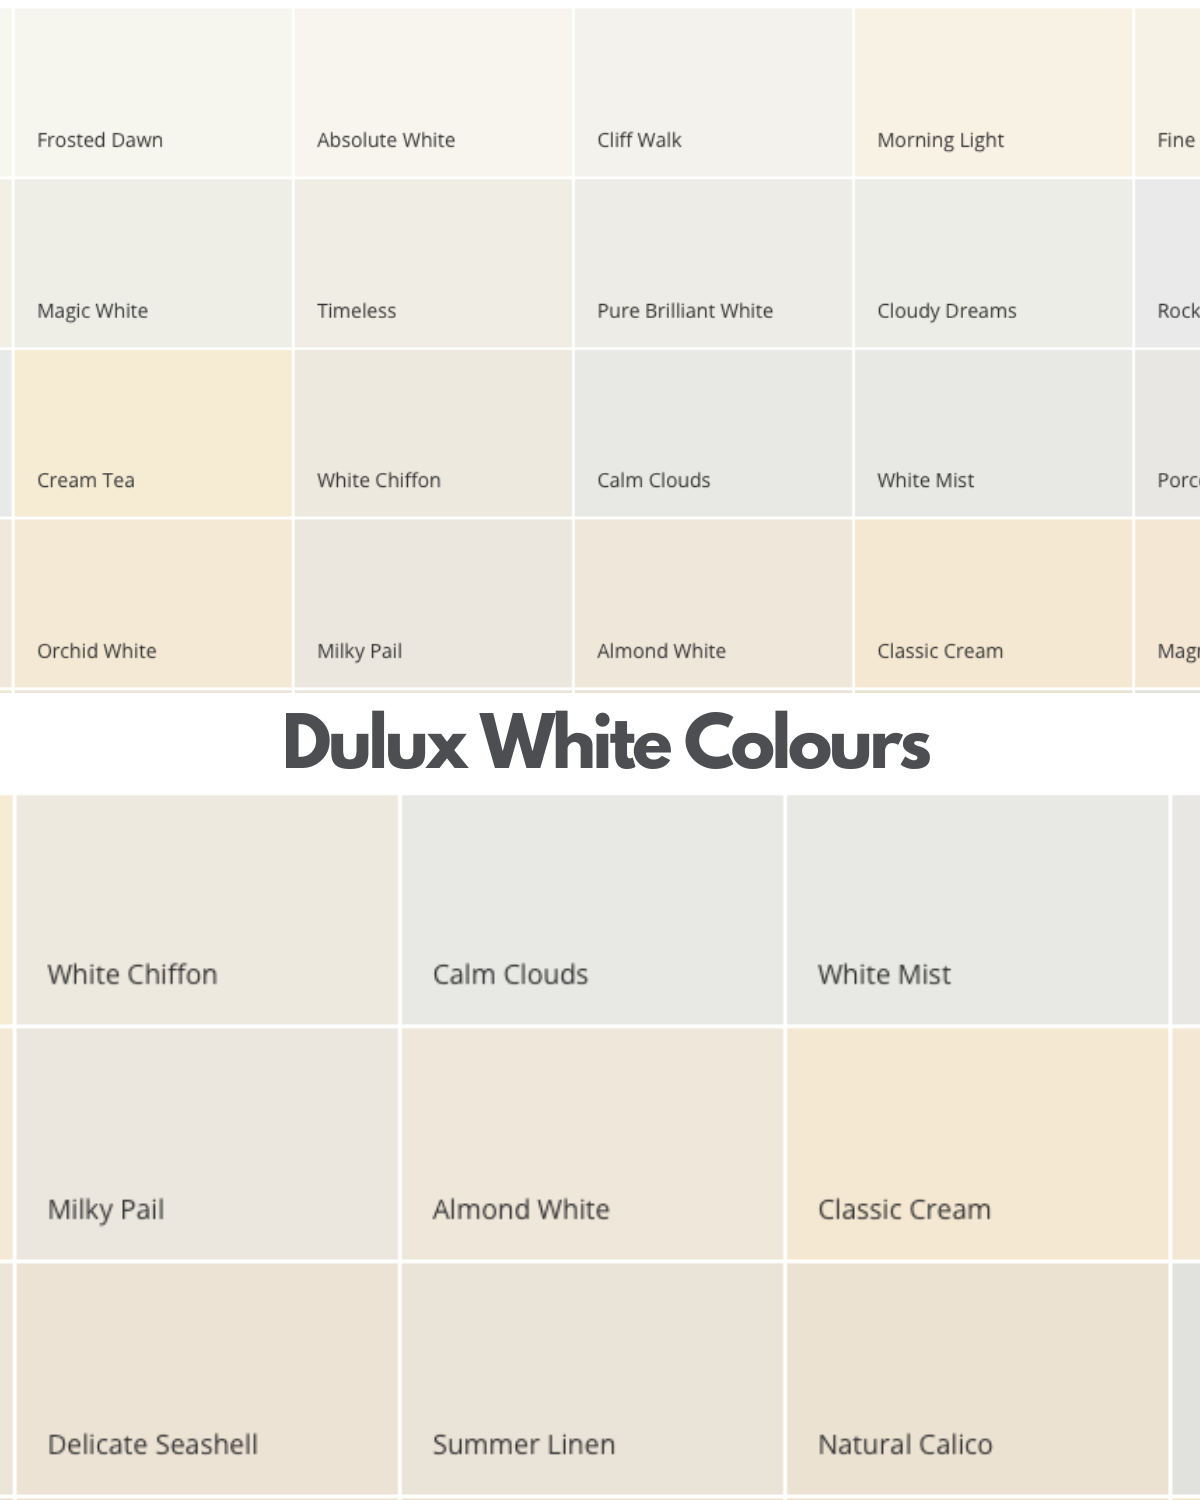 Dulux White Colour Chart The Dulux White Colours Sleekchic Interiors